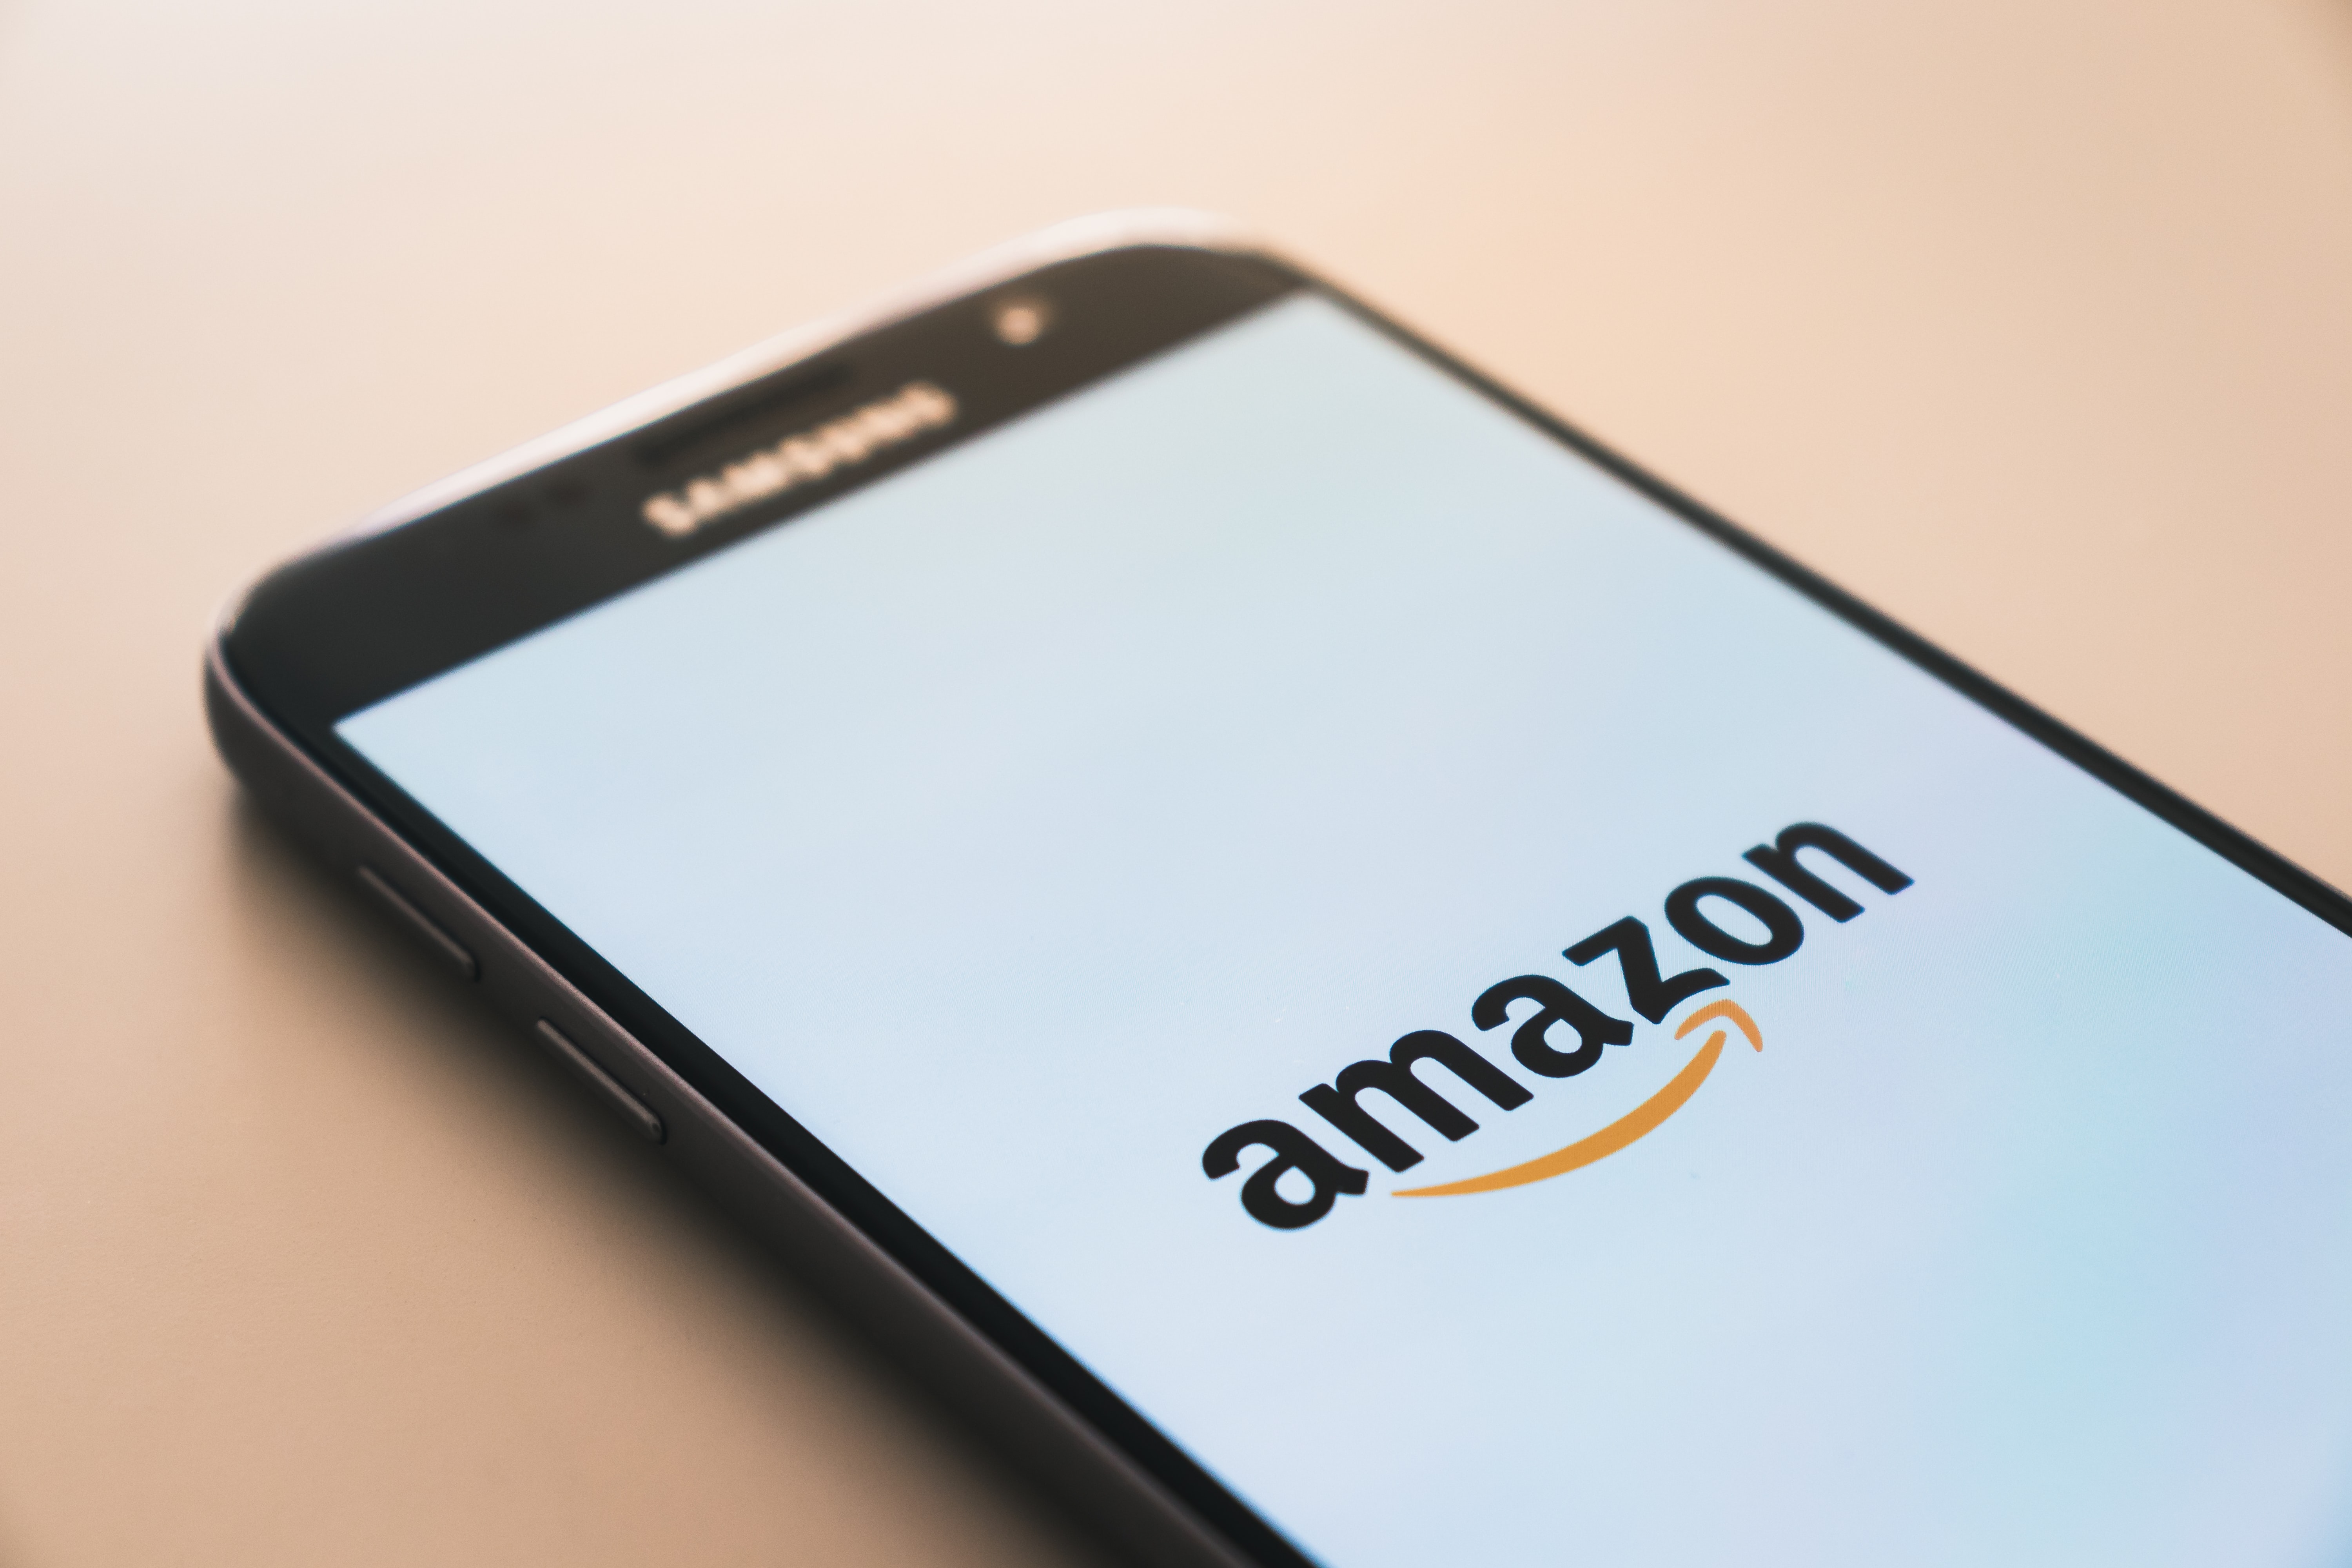 Amazon Best Sellers in Lockdown